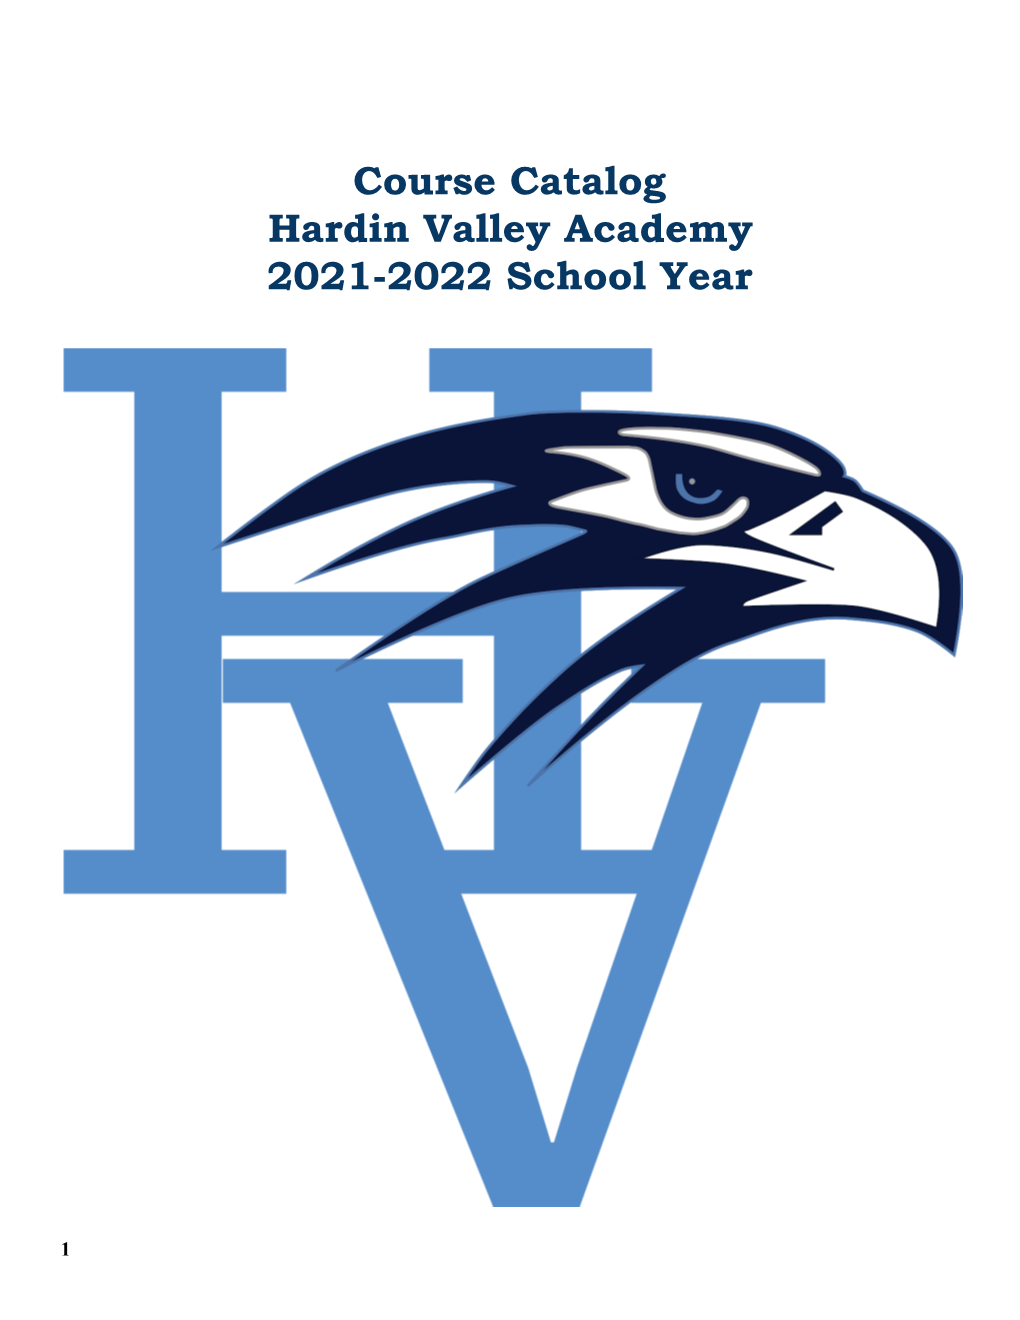 Course Catalog Hardin Valley Academy 2021-2022 School Year